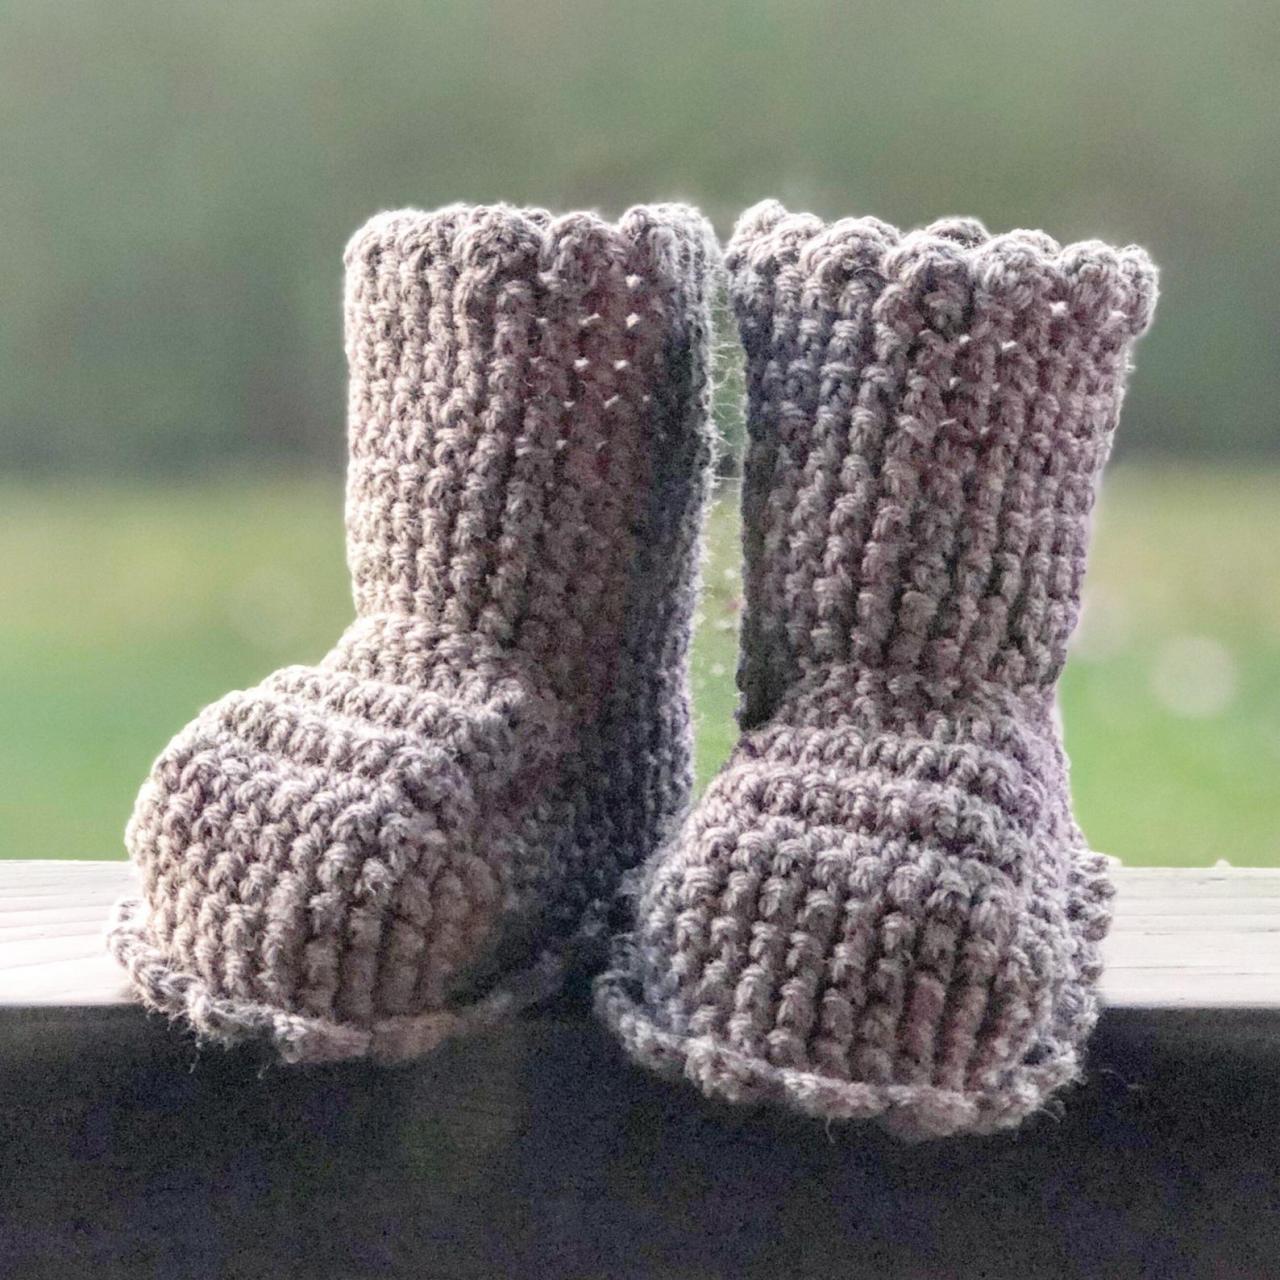 Crocheted Slippers - Soft Wool Yarn - Booth Edition 2020 (baby Slippers, Wool, Baby Gift, Newborn, Boy, Girl)